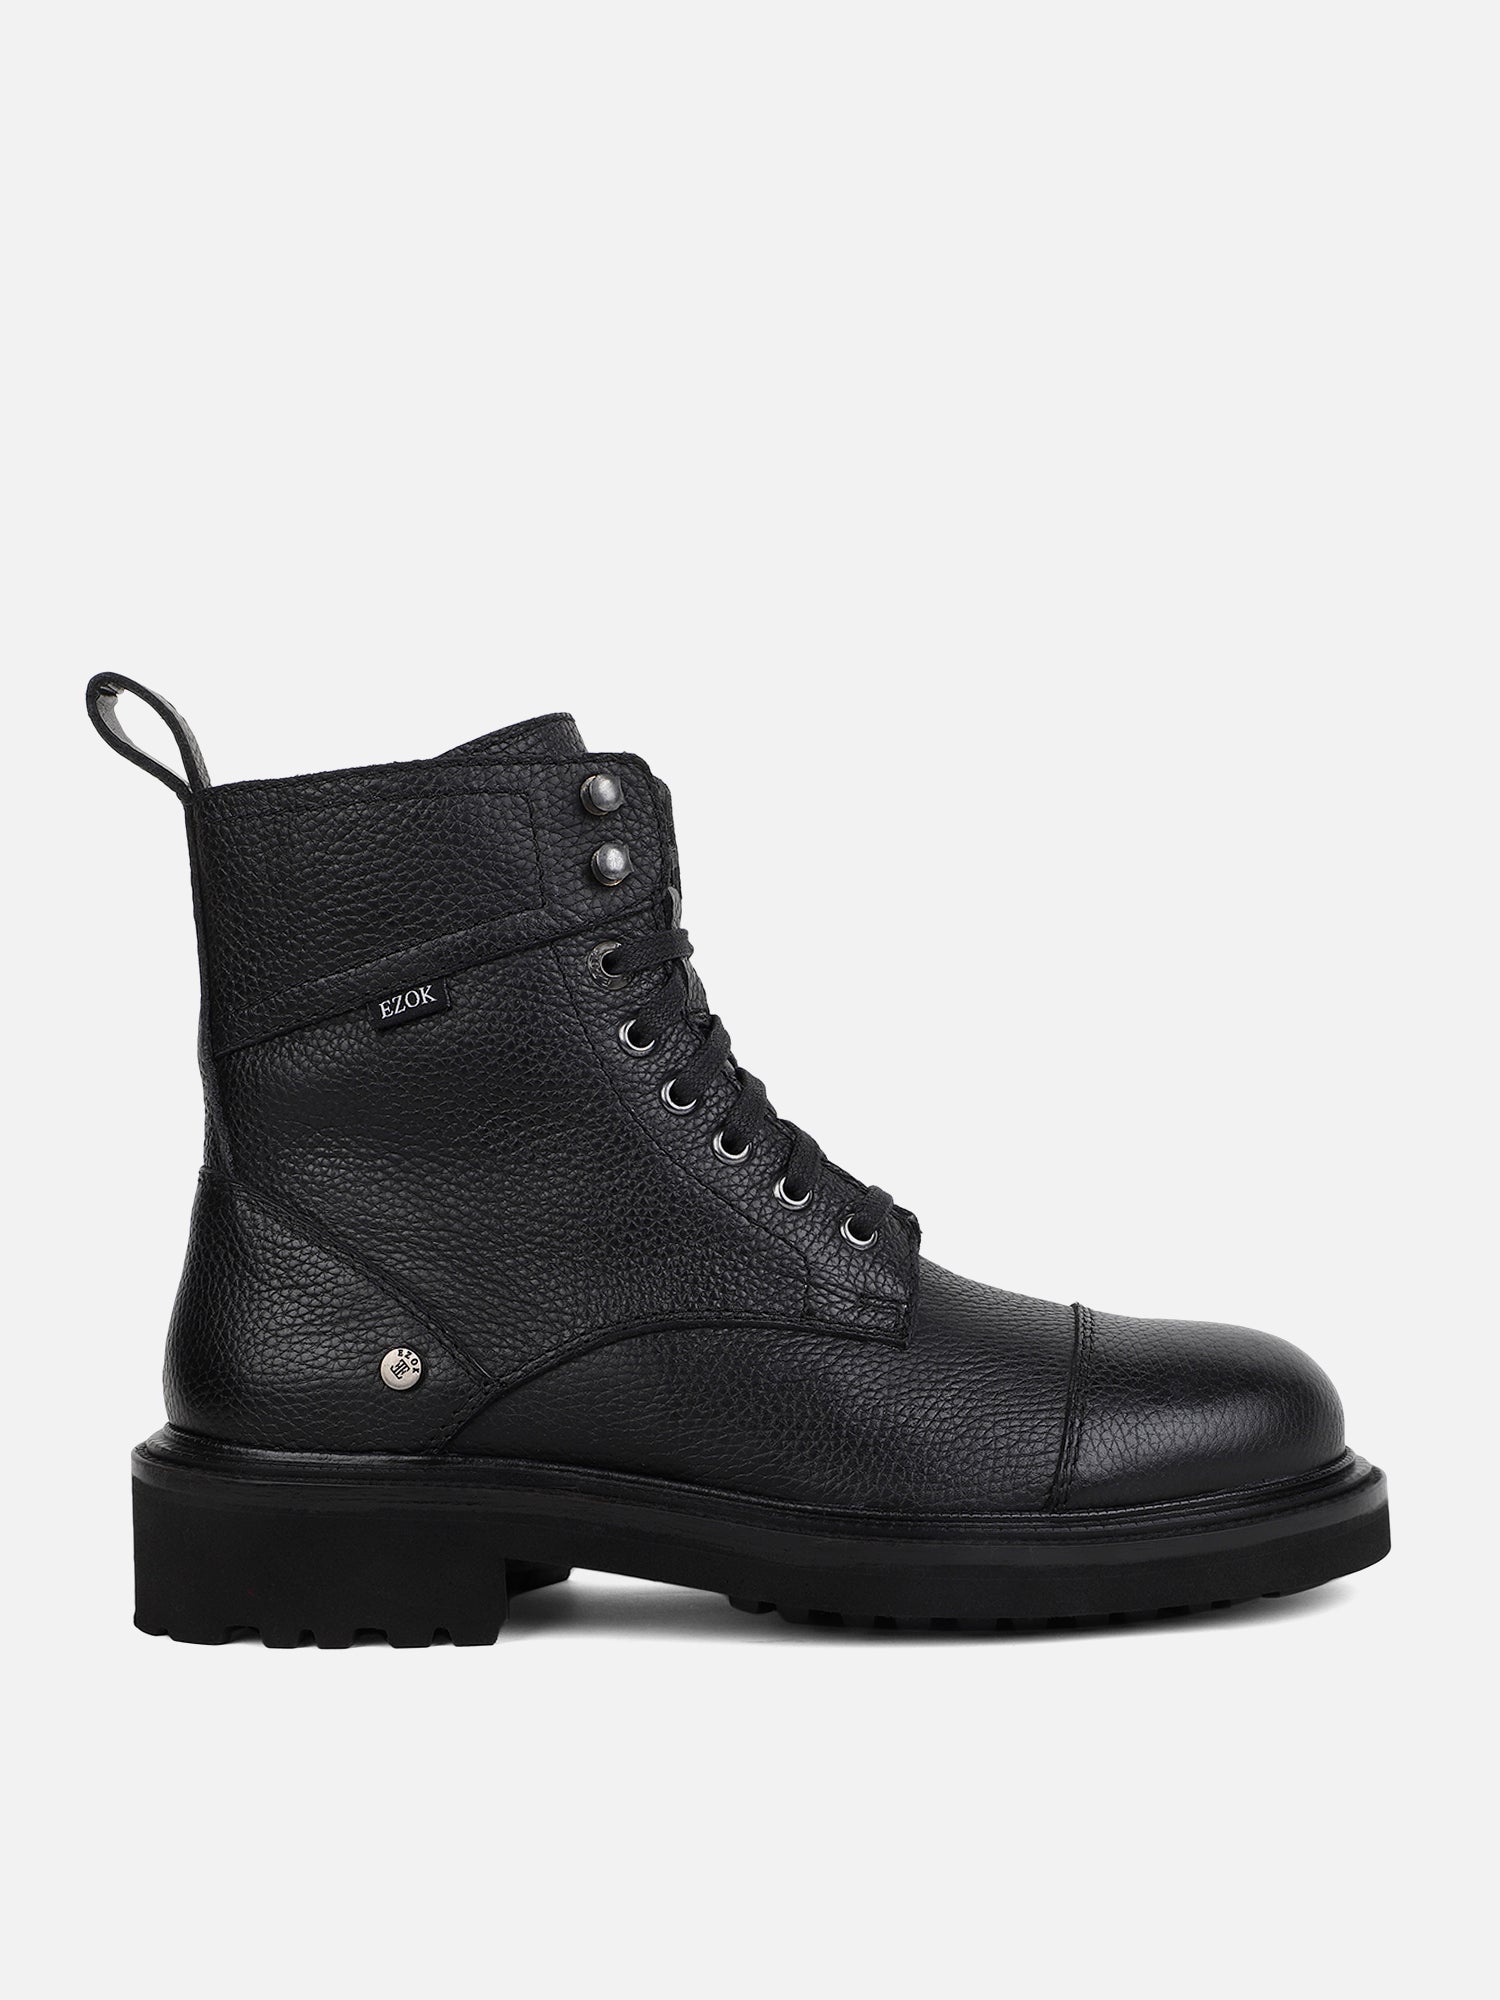 Ezok Black Lace-ups Leather Boot For Men